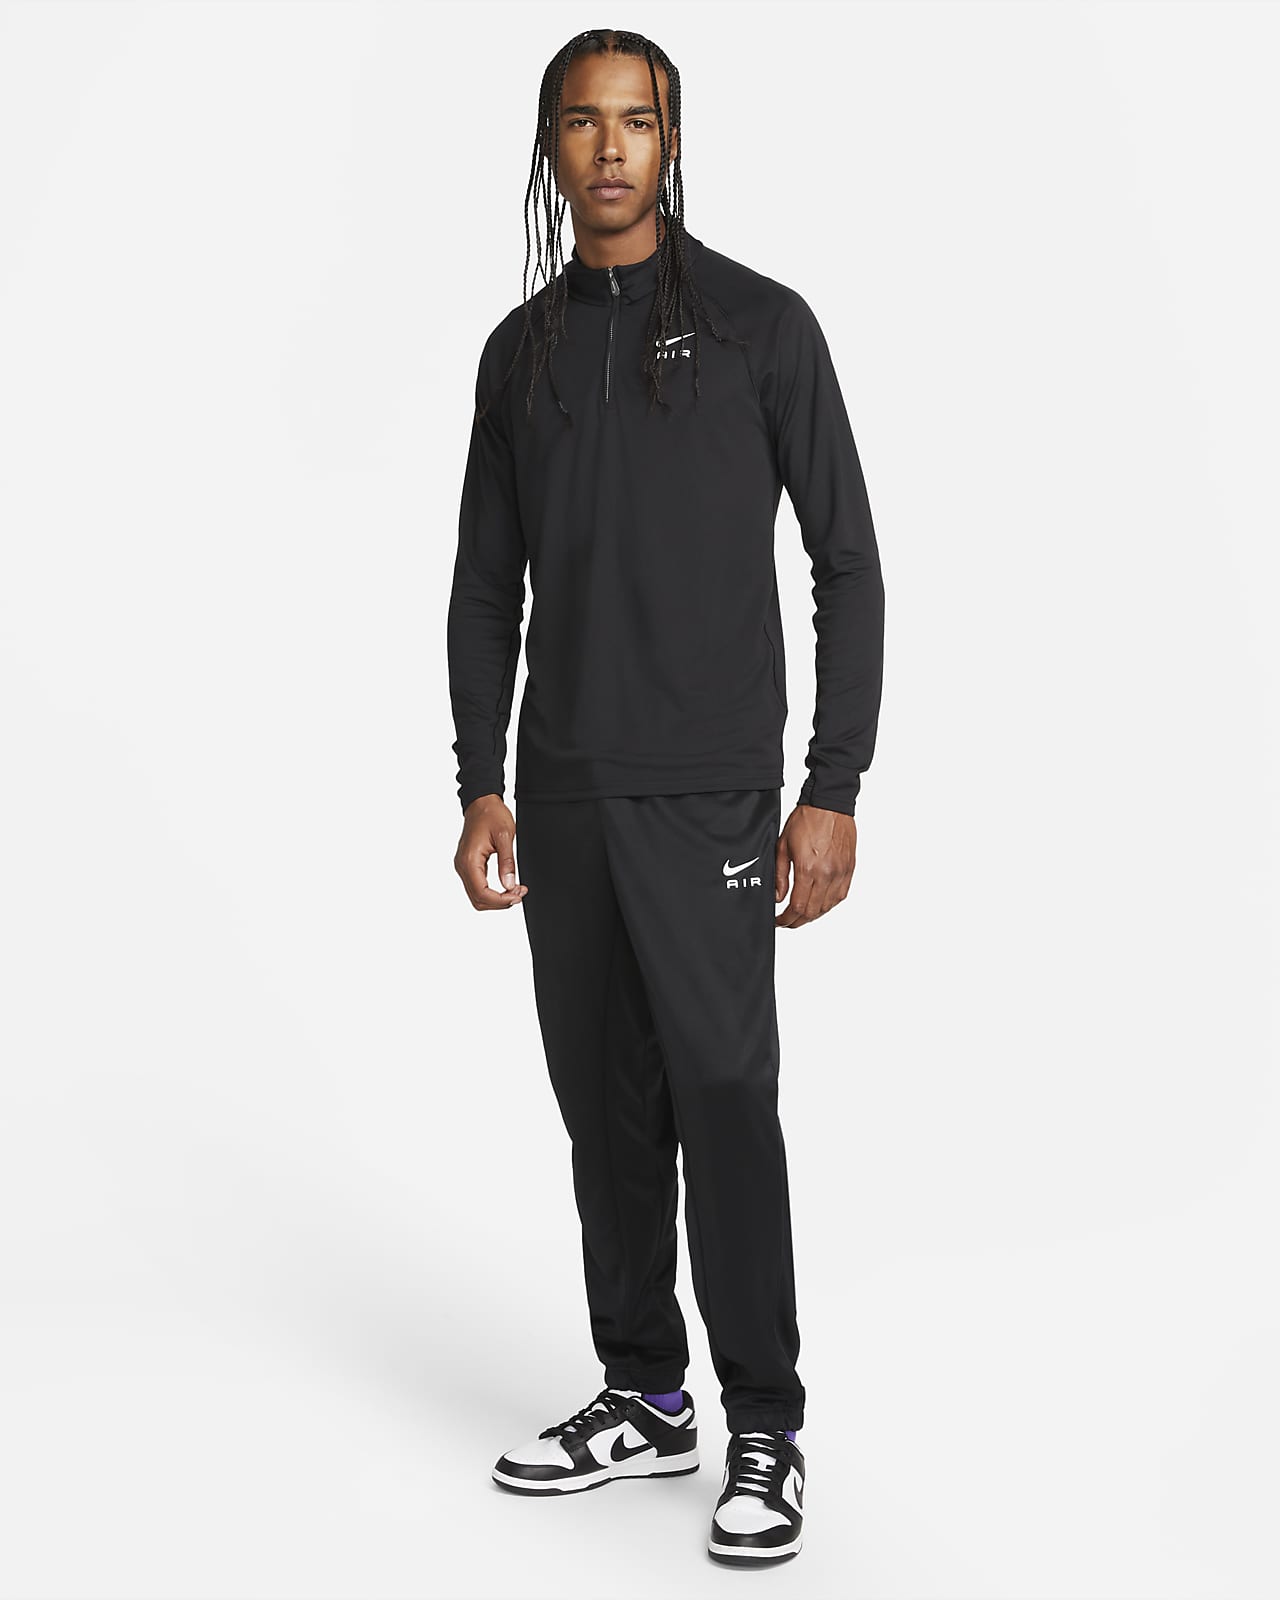 Nike Sportswear Air Men's 1/4-Zip Polyknit Top. Nike LU